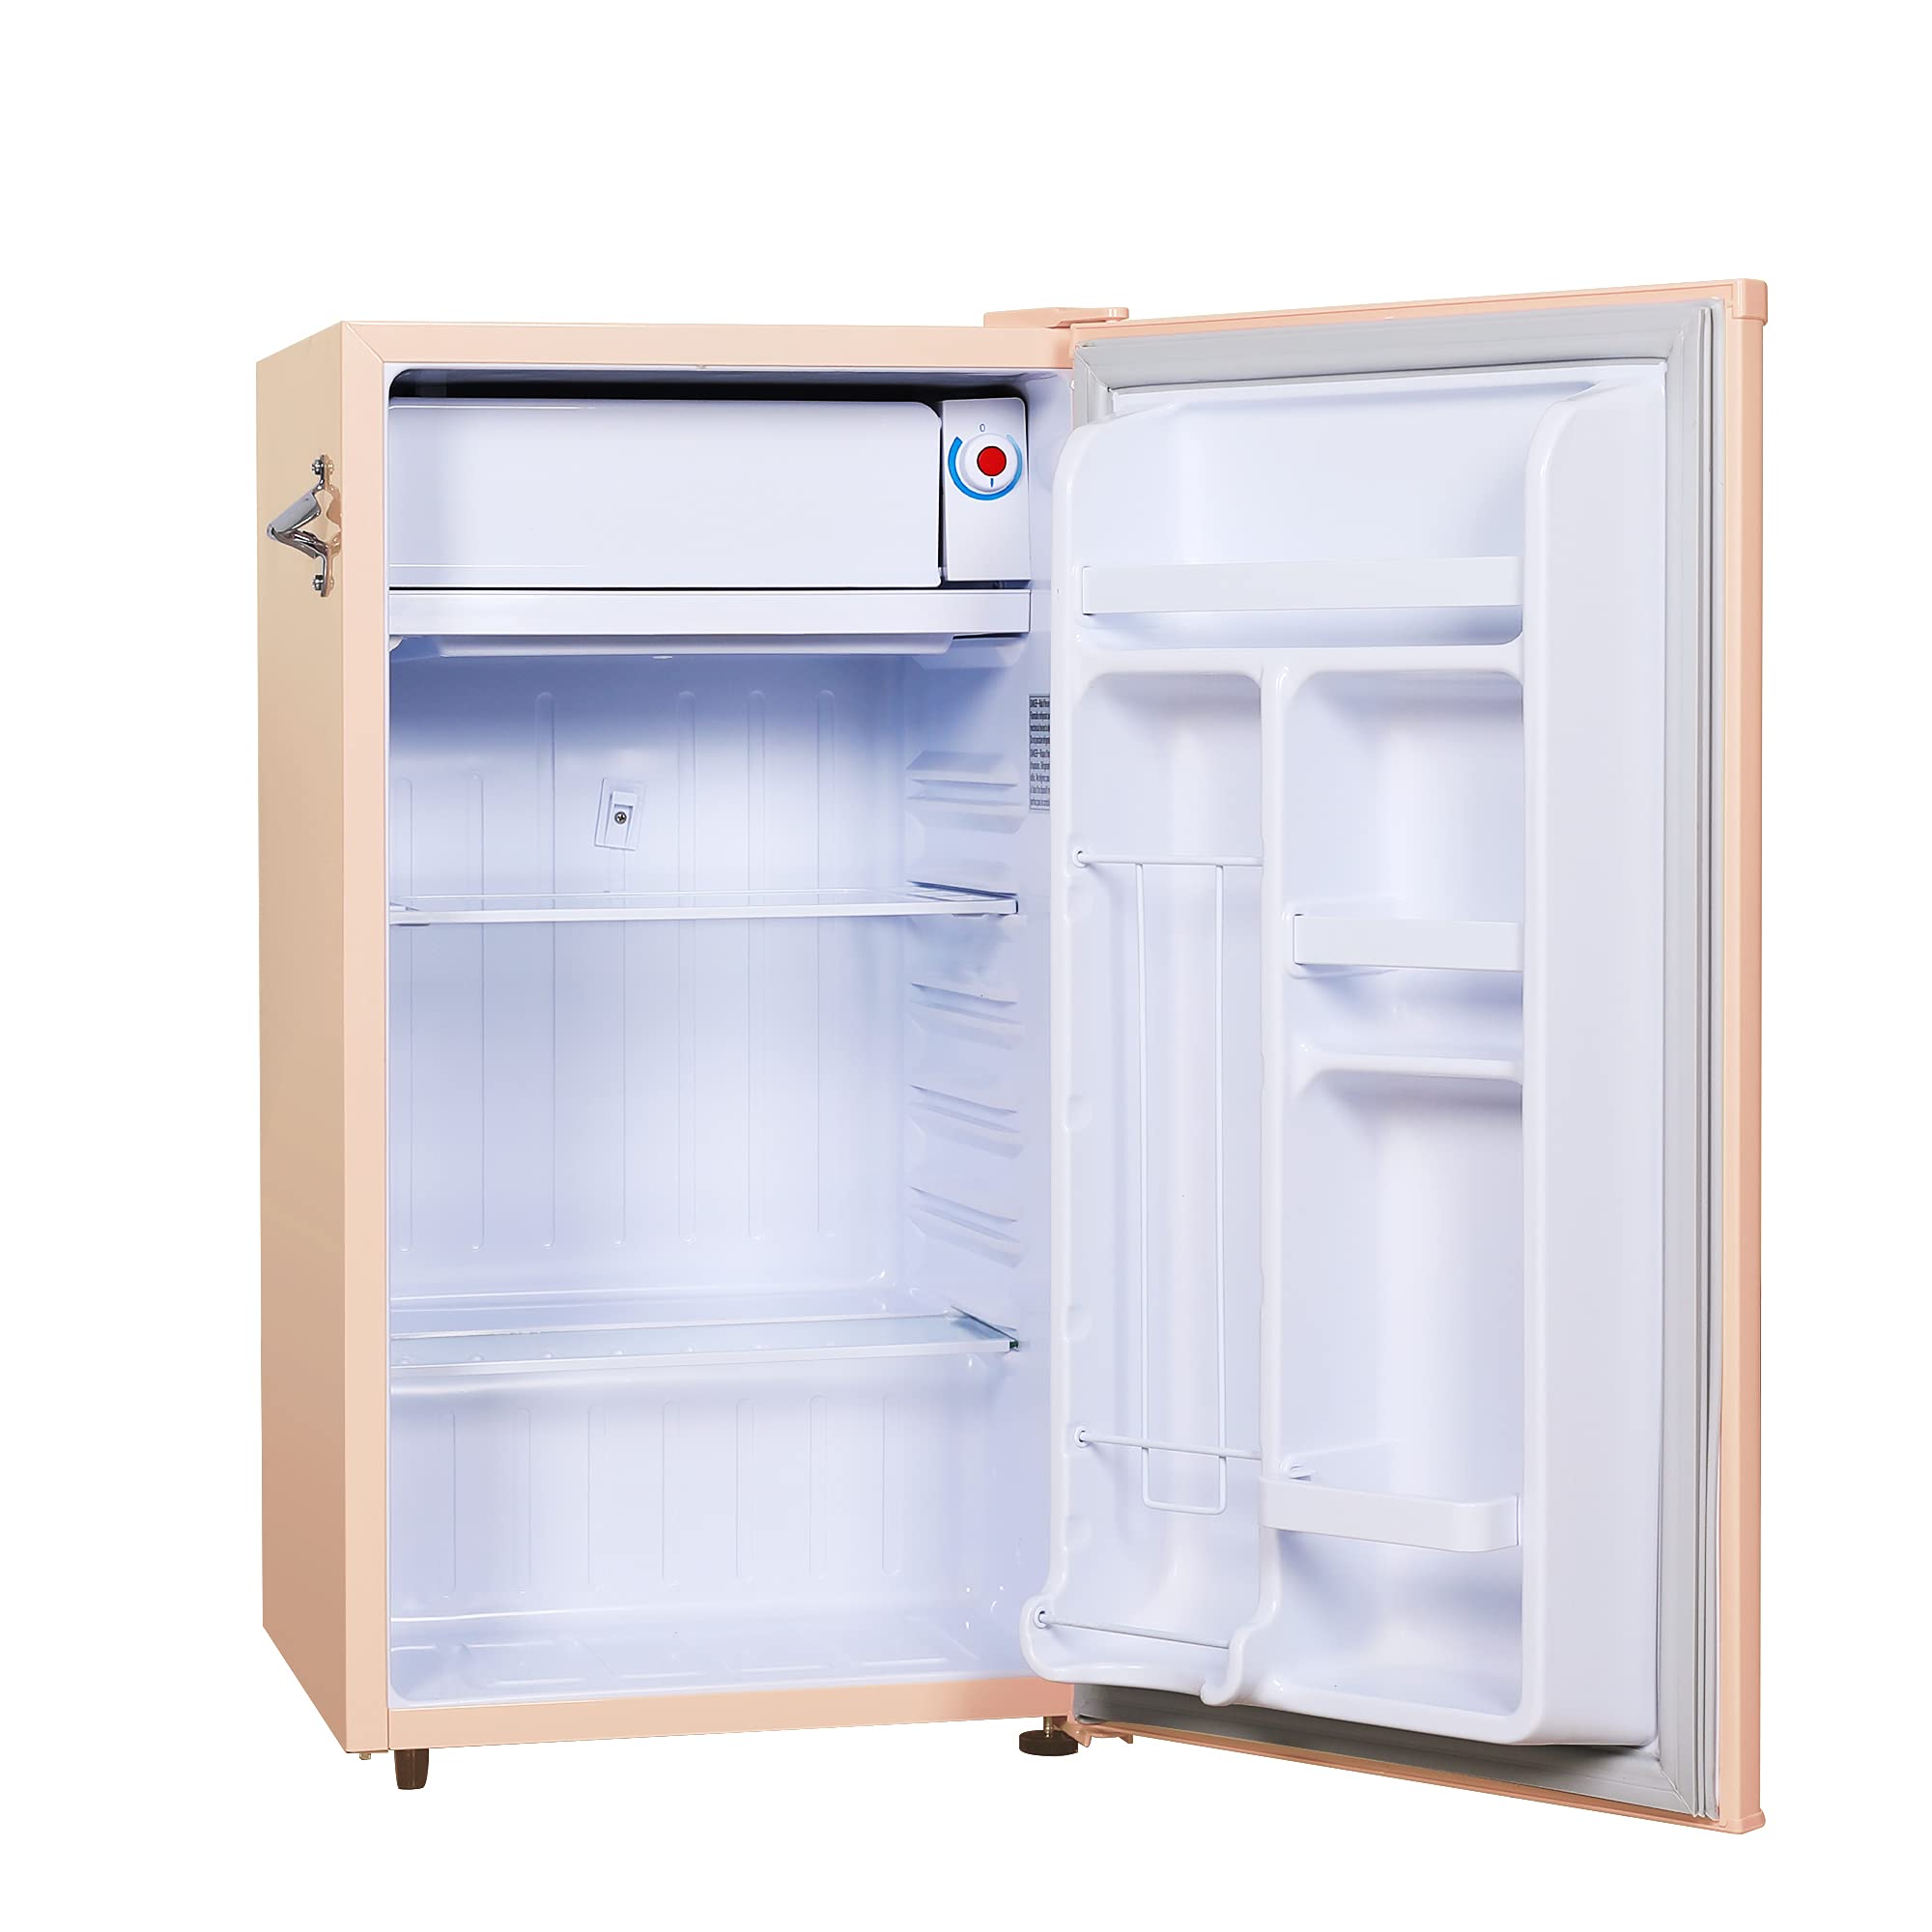 Frigidaire EFR376-CORAL Retro Bar Fridge Refrigerator with Side Bottle Opener, 3.2 cu. Ft, Coral